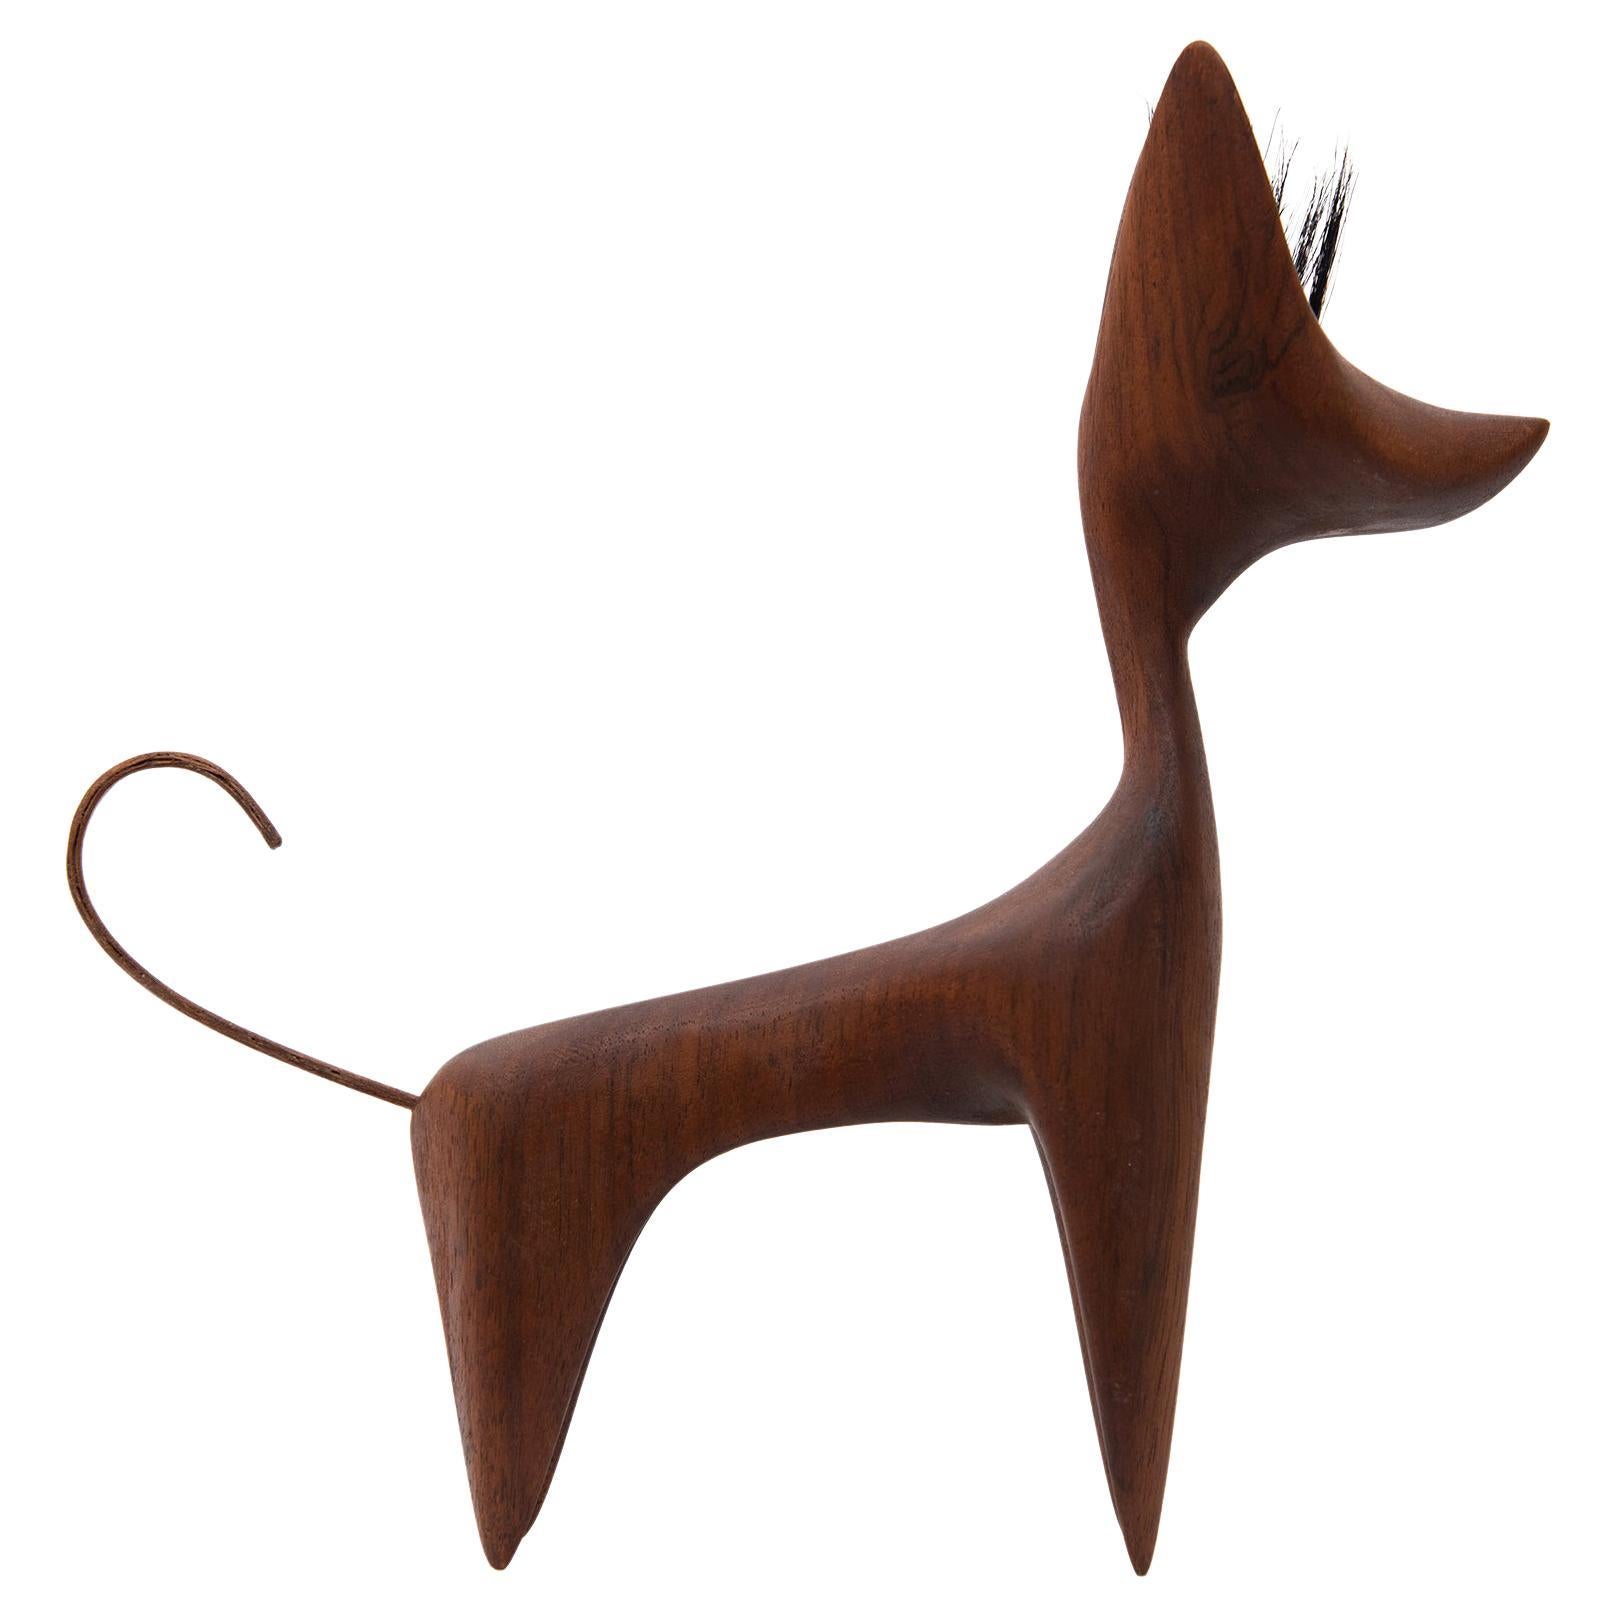 Lola by Design VA . Xoloitzcuintle Wood Sculpture